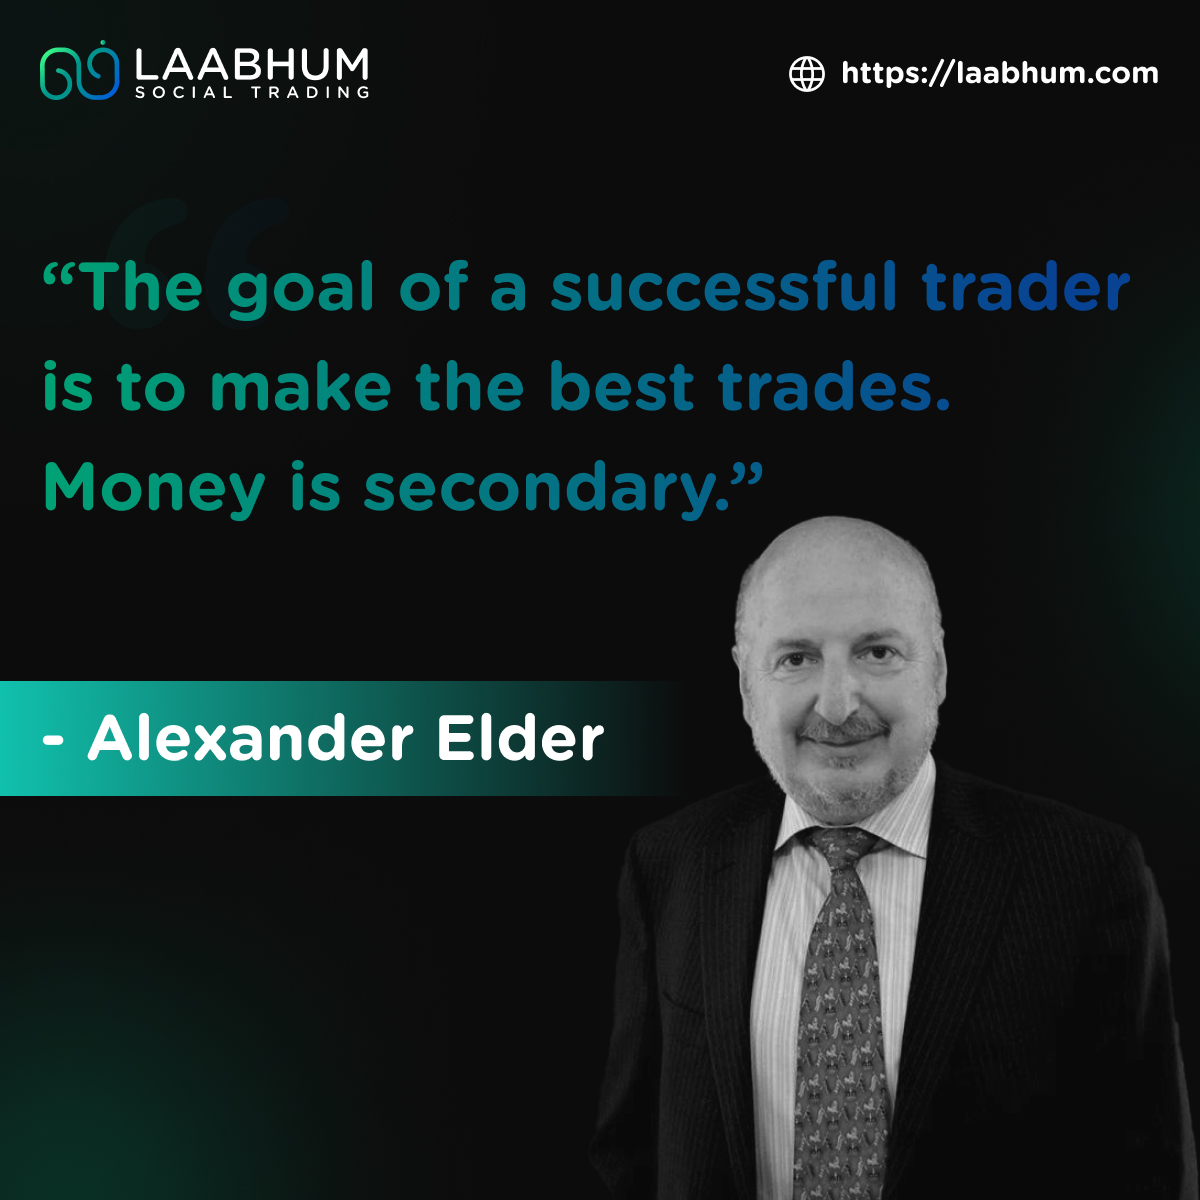 Wise words from #AlexanderElder

Join us @laabhumsocial for trading insights.

#Laabhum #laabhumsocialtrading #OptionsTrading #SuccessQuotes #MotivationMonday